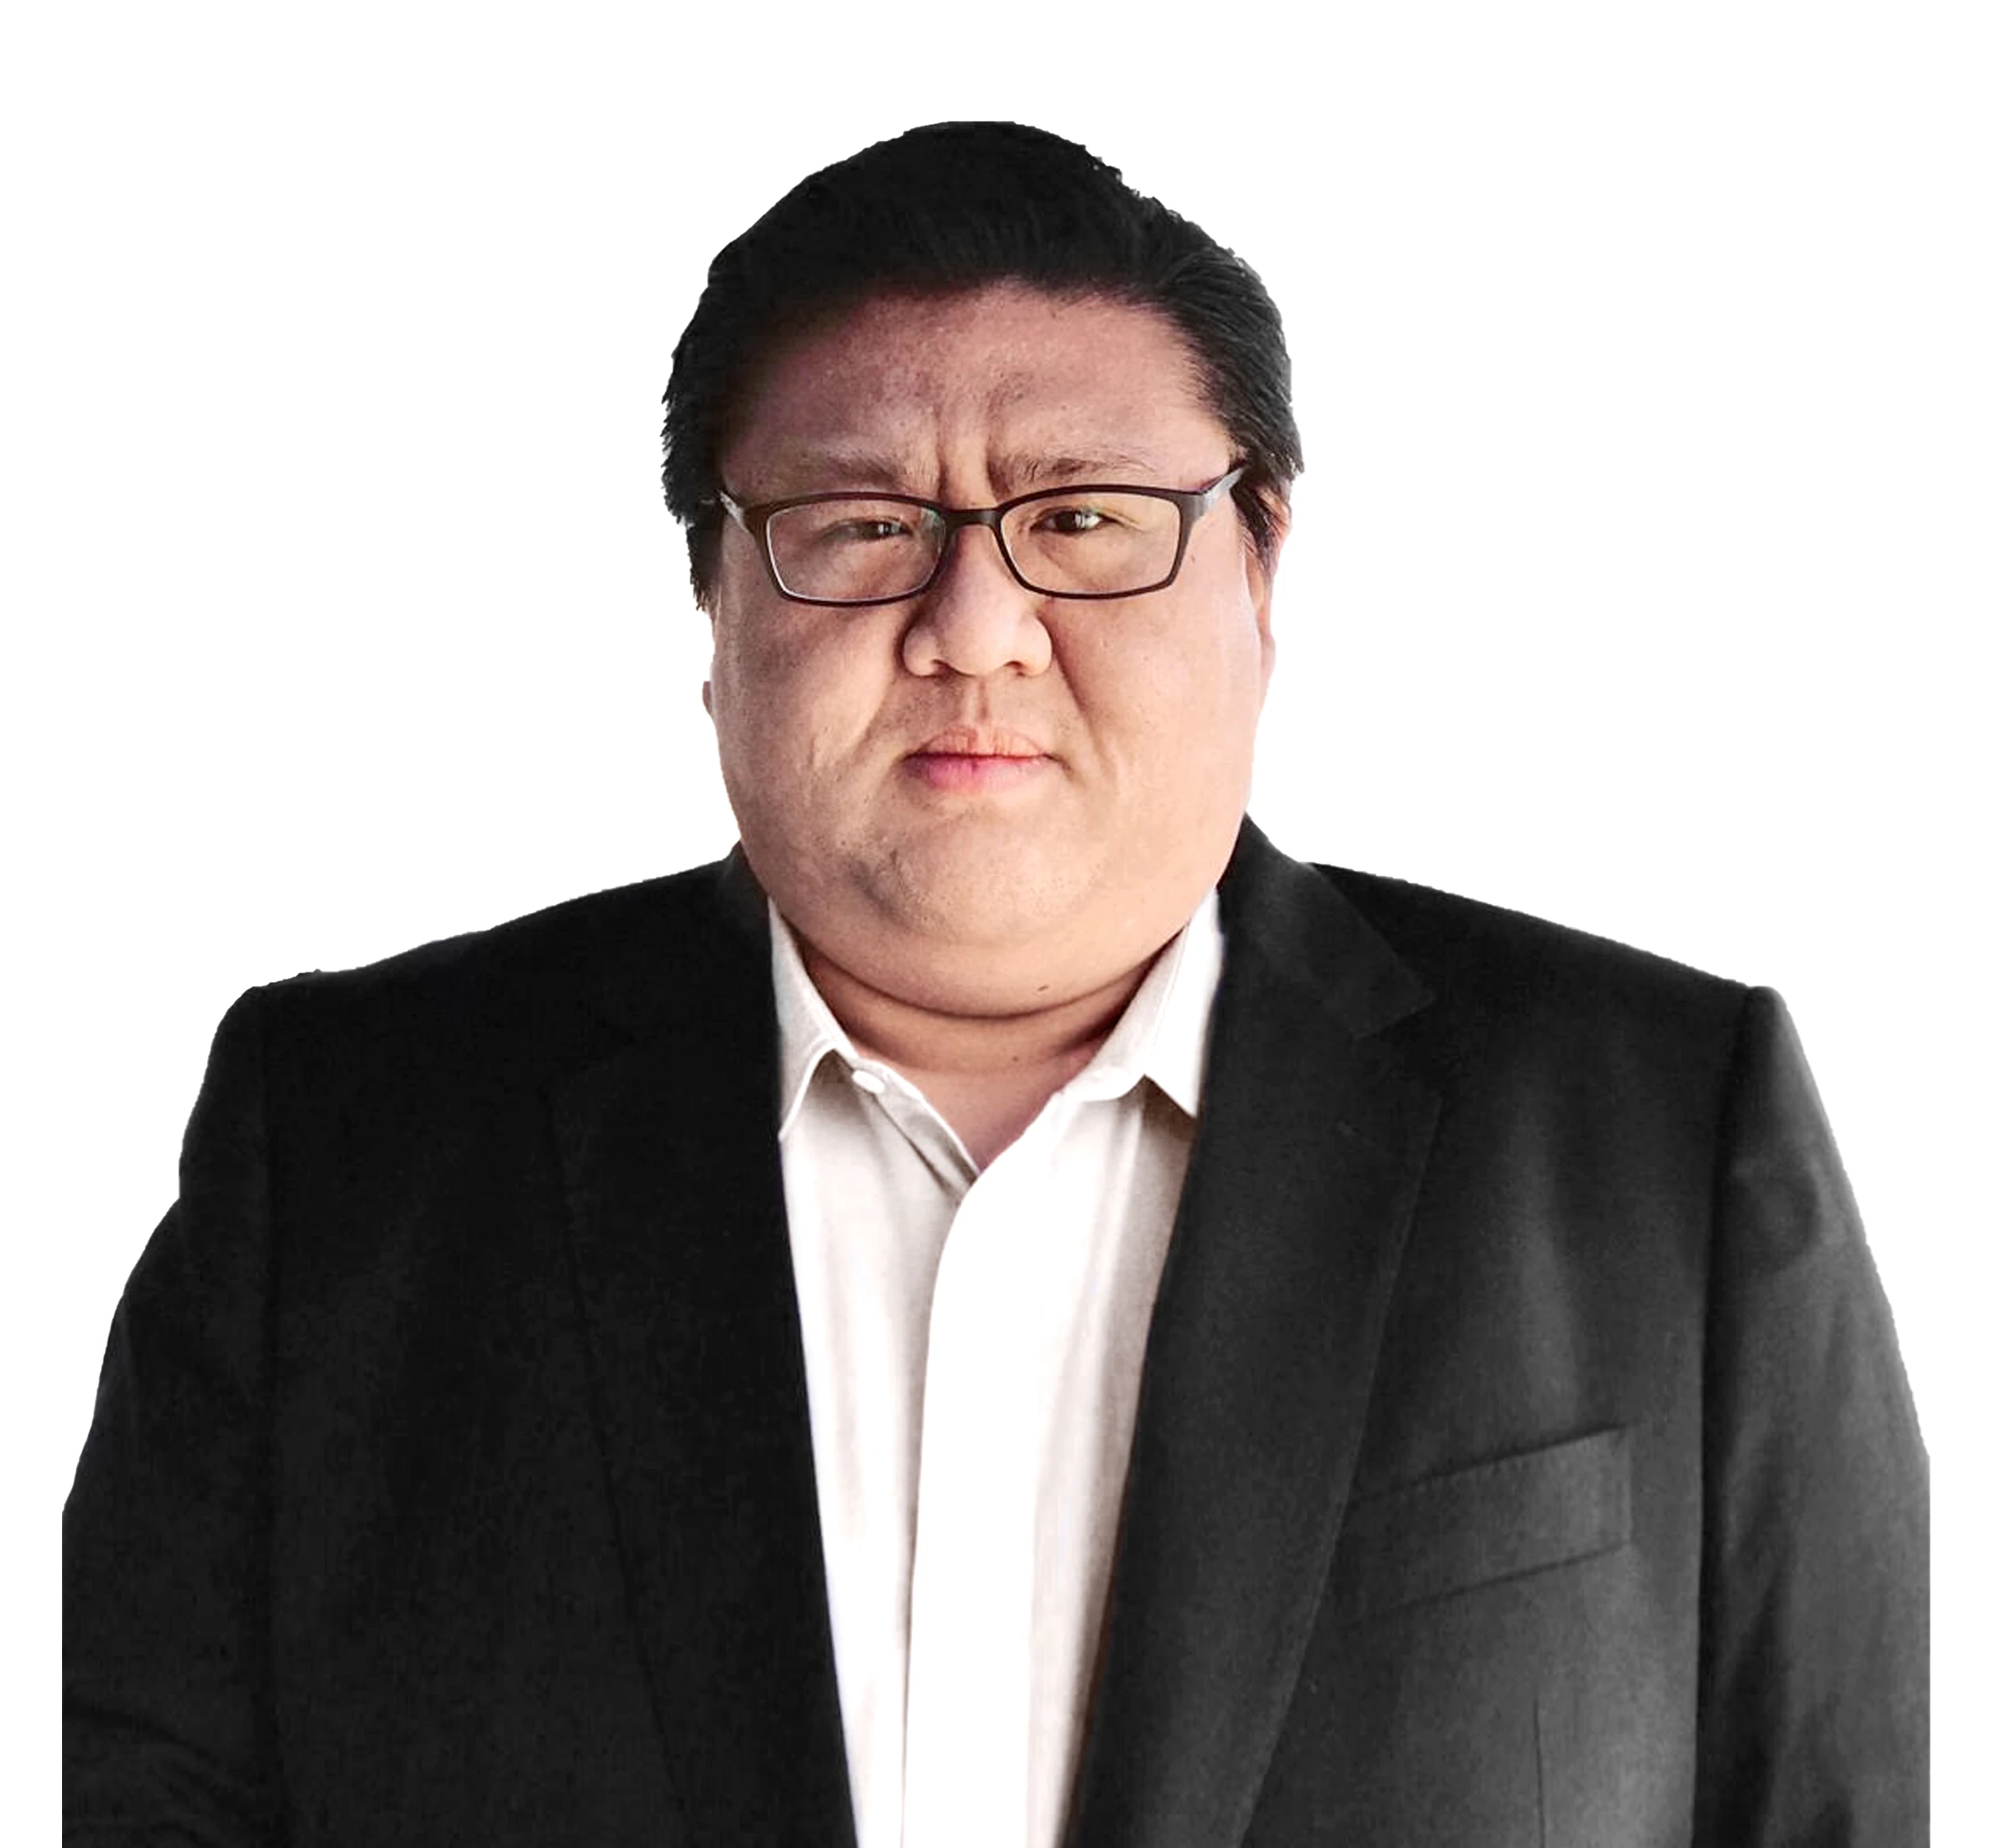 Shawn Tan CEO of Skymind